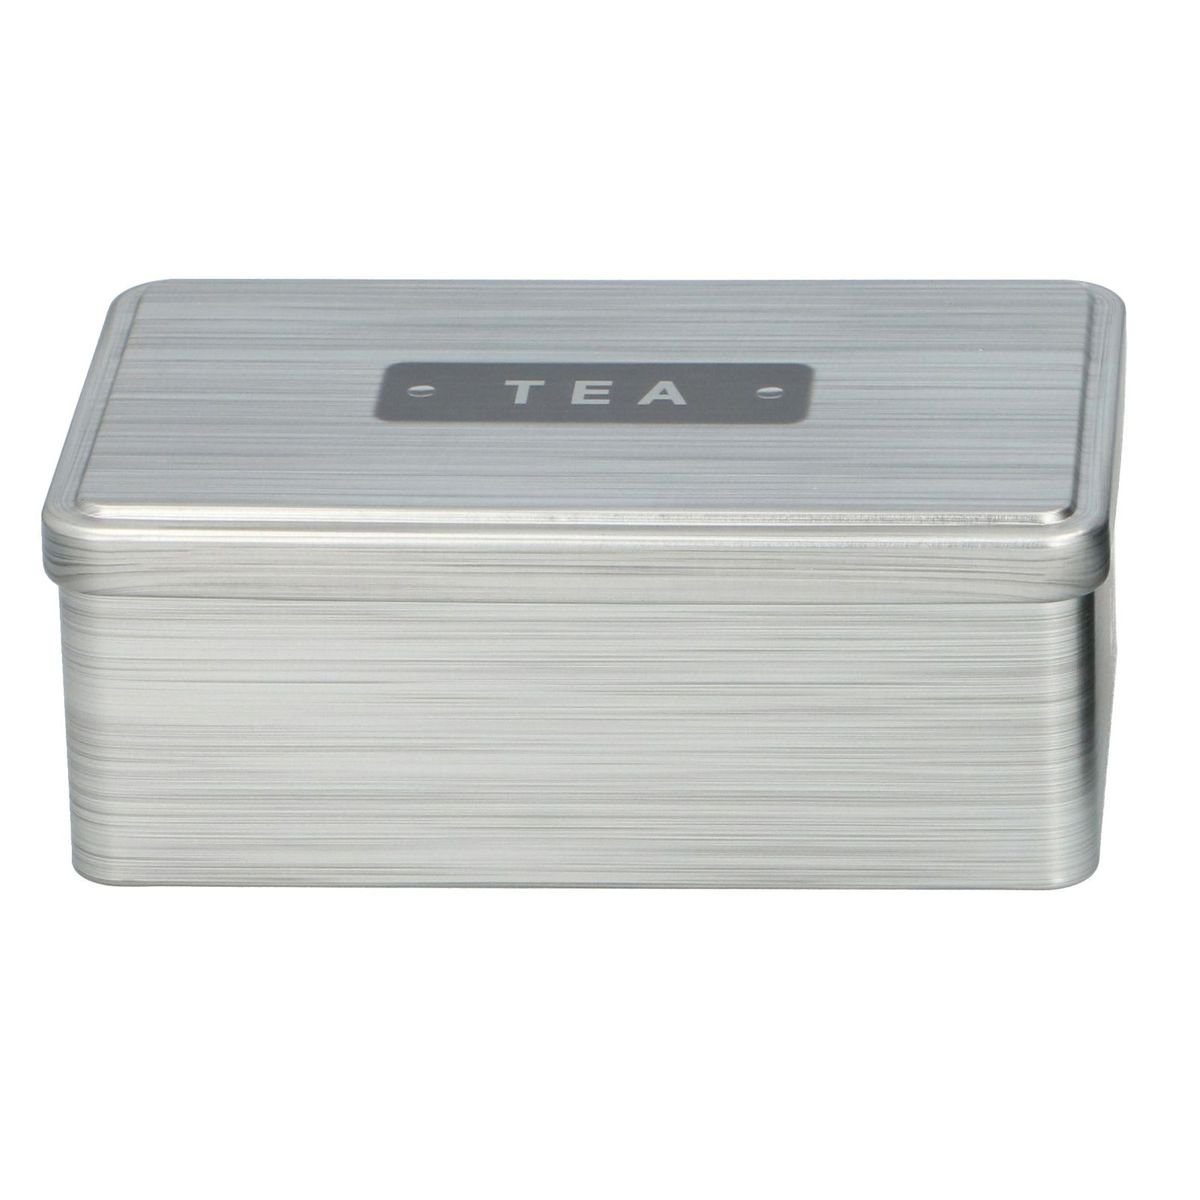 Marabellas Shop Teebox Aufbewahrungsbox Teebox 18x11x7 cm aus Blech mit Aufdruck "TEA", Metall Silber